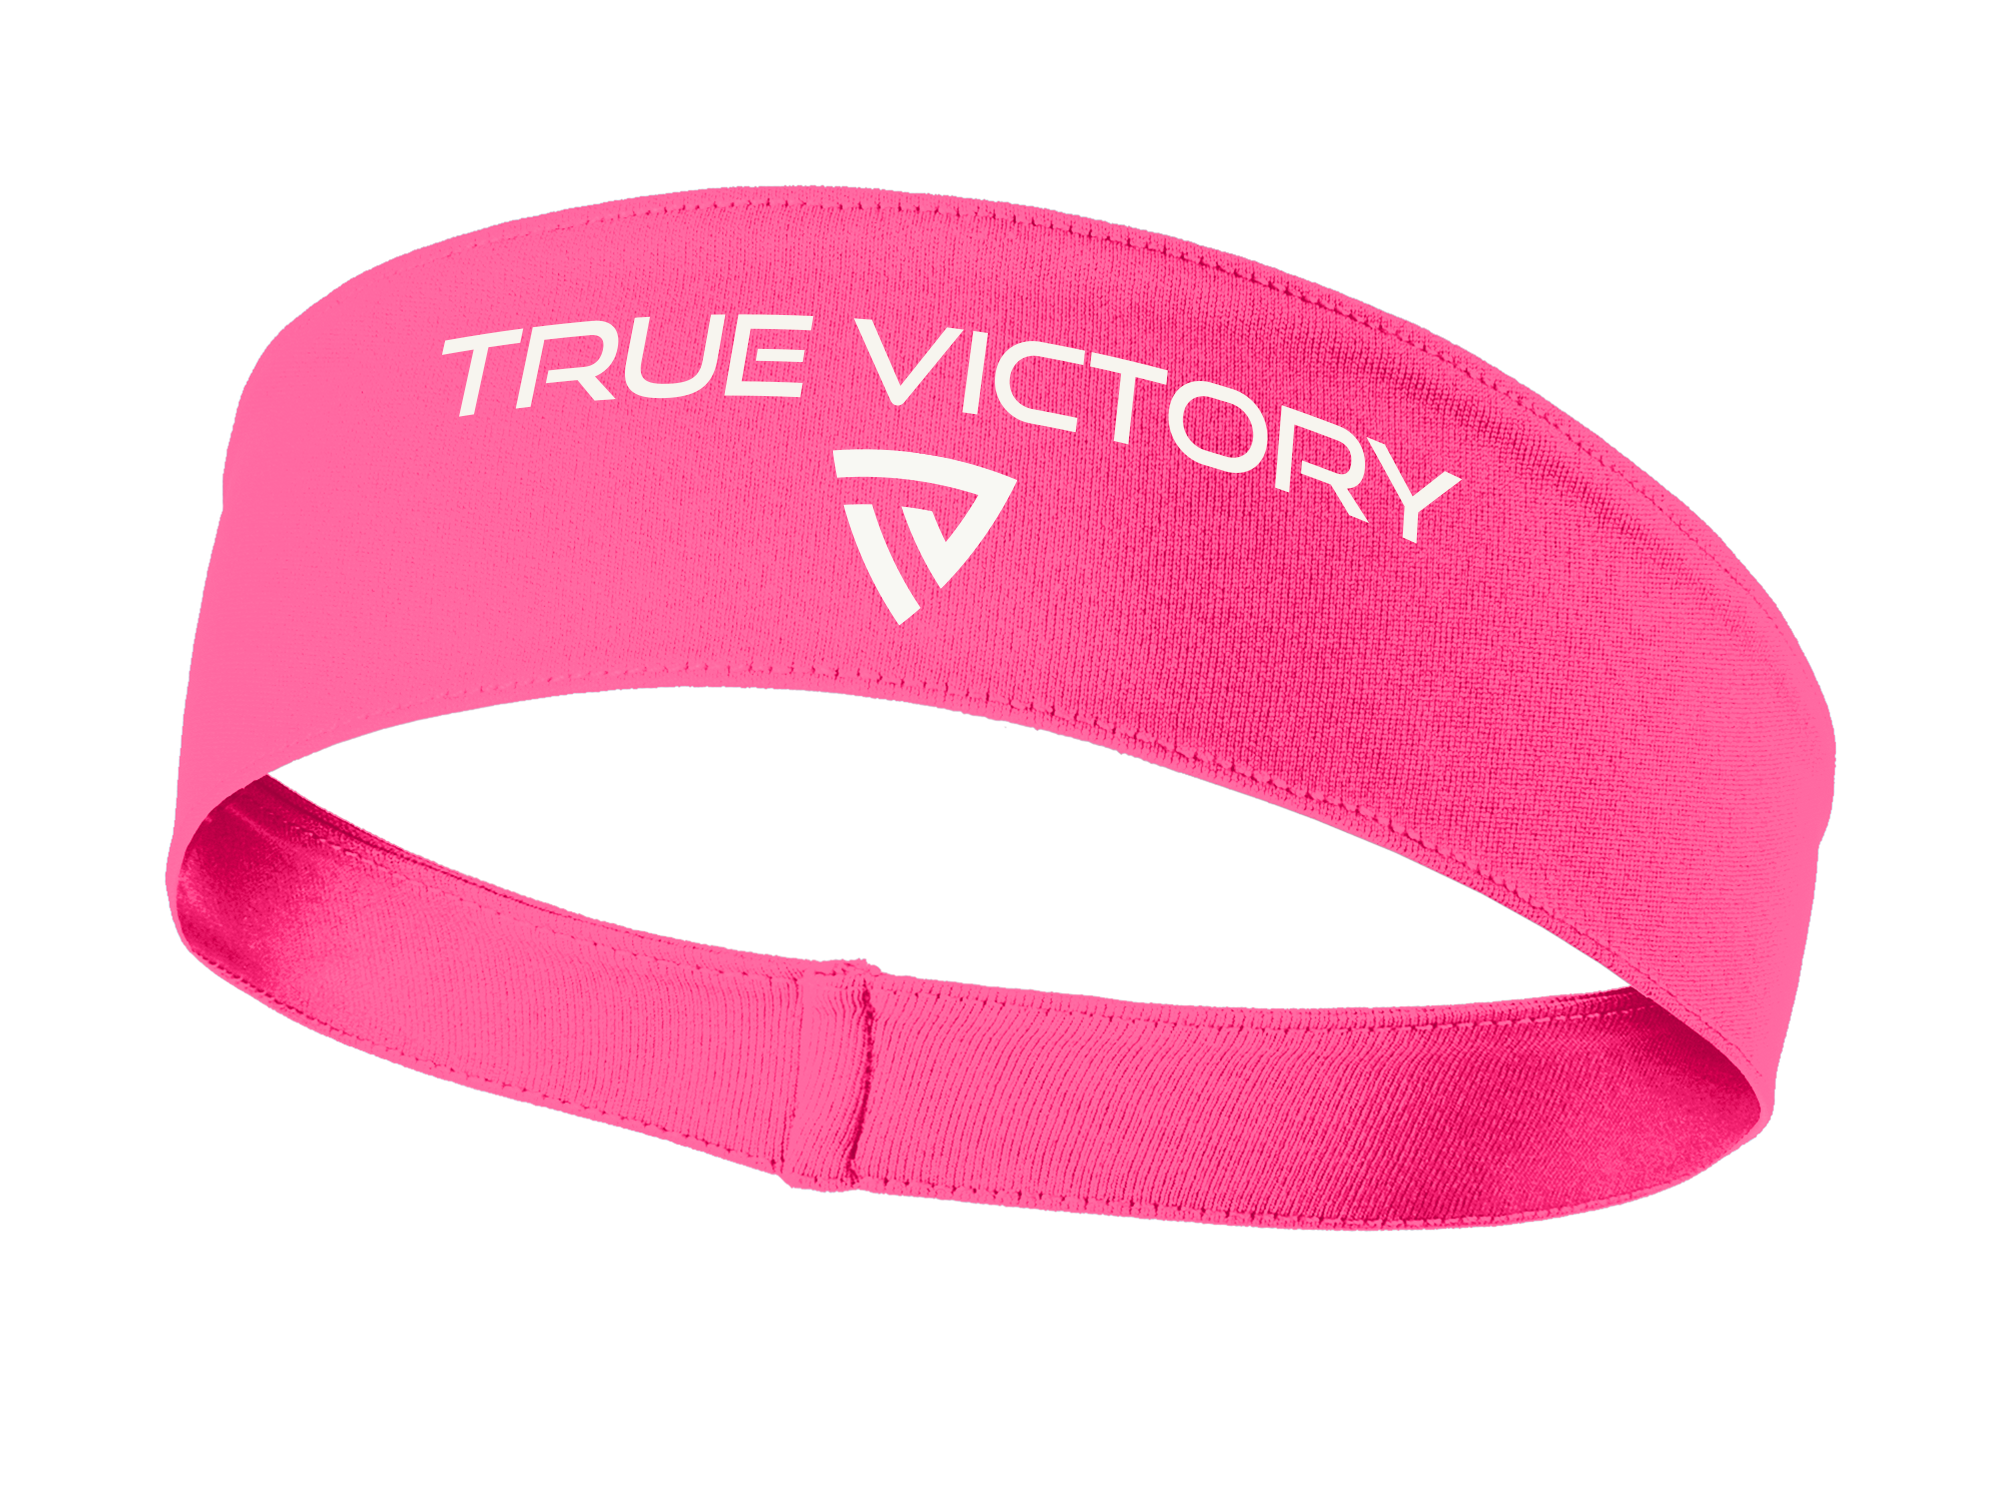 Victorious Neon Pink Headband